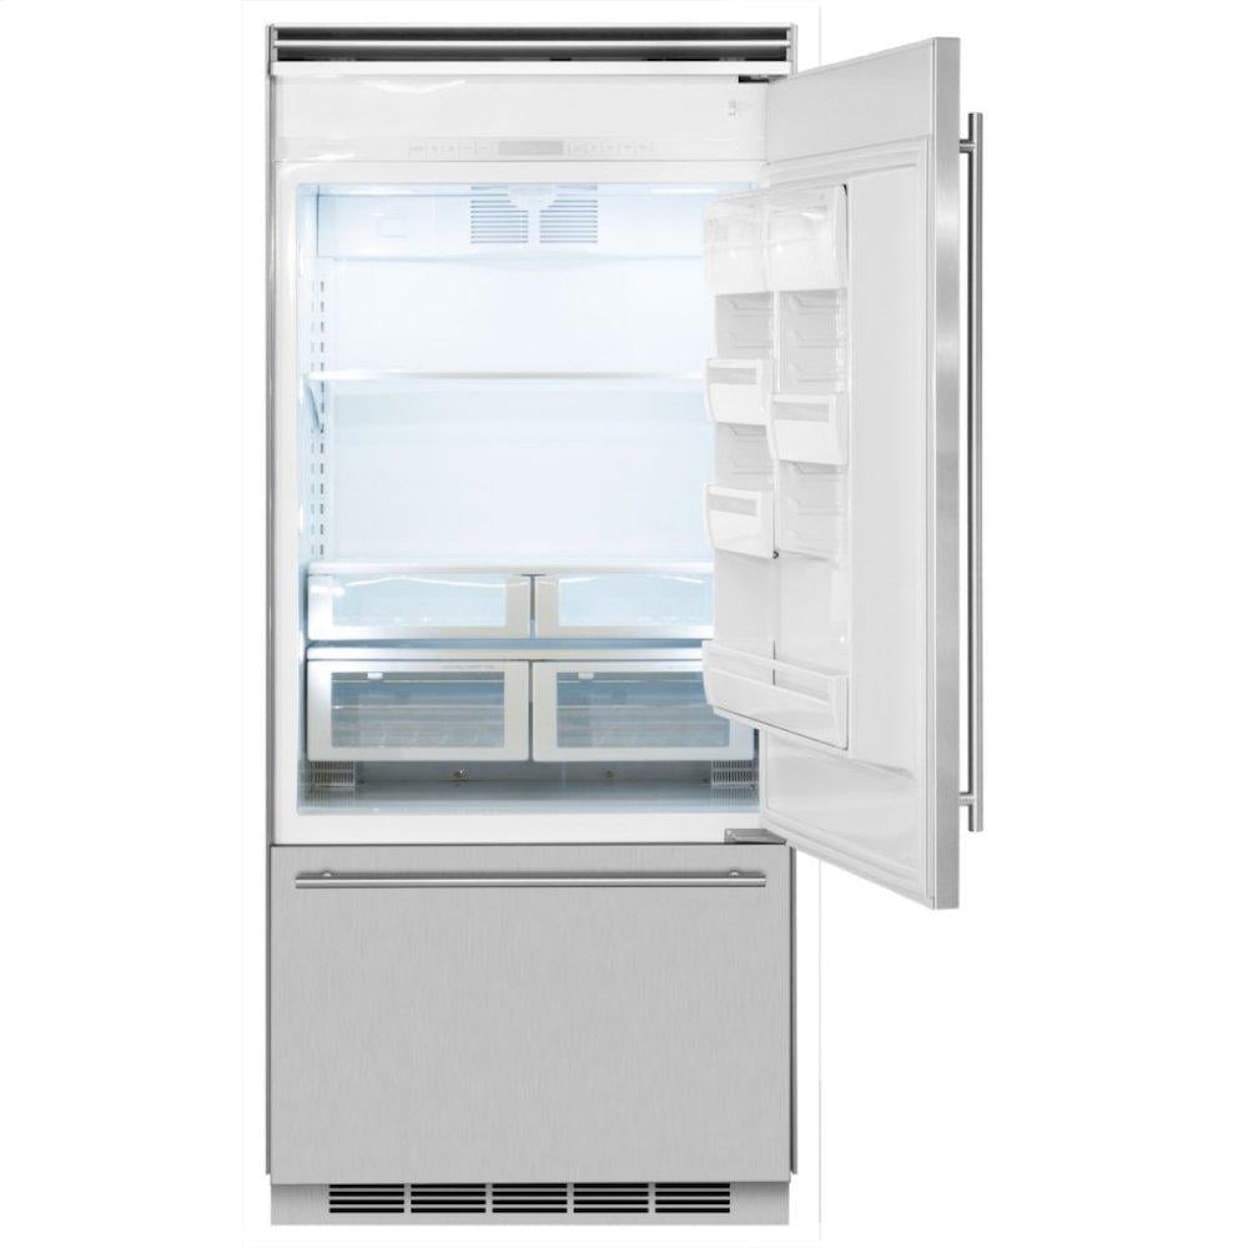 Marvel Industries Refrigerators Bottom Freezer Built In Refrigerator